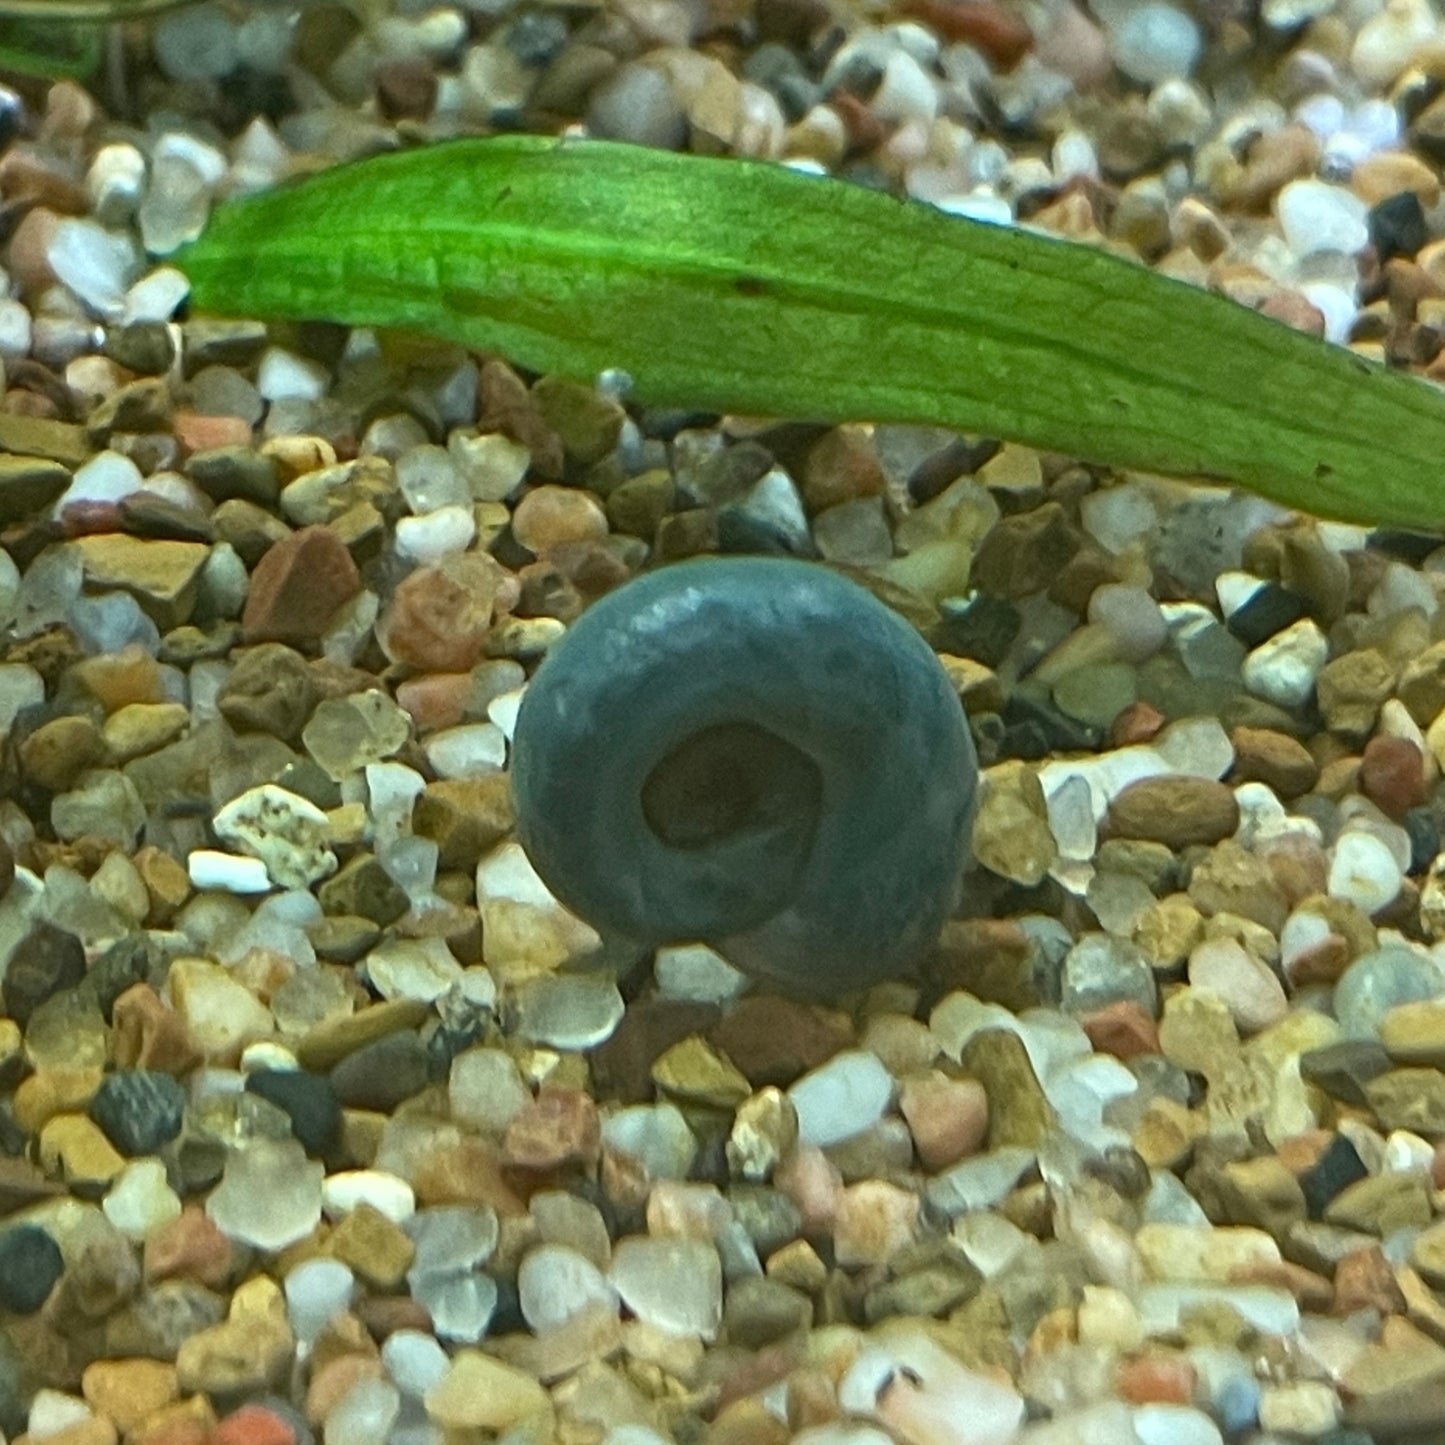 Blue Leopard Ramshorn Snails